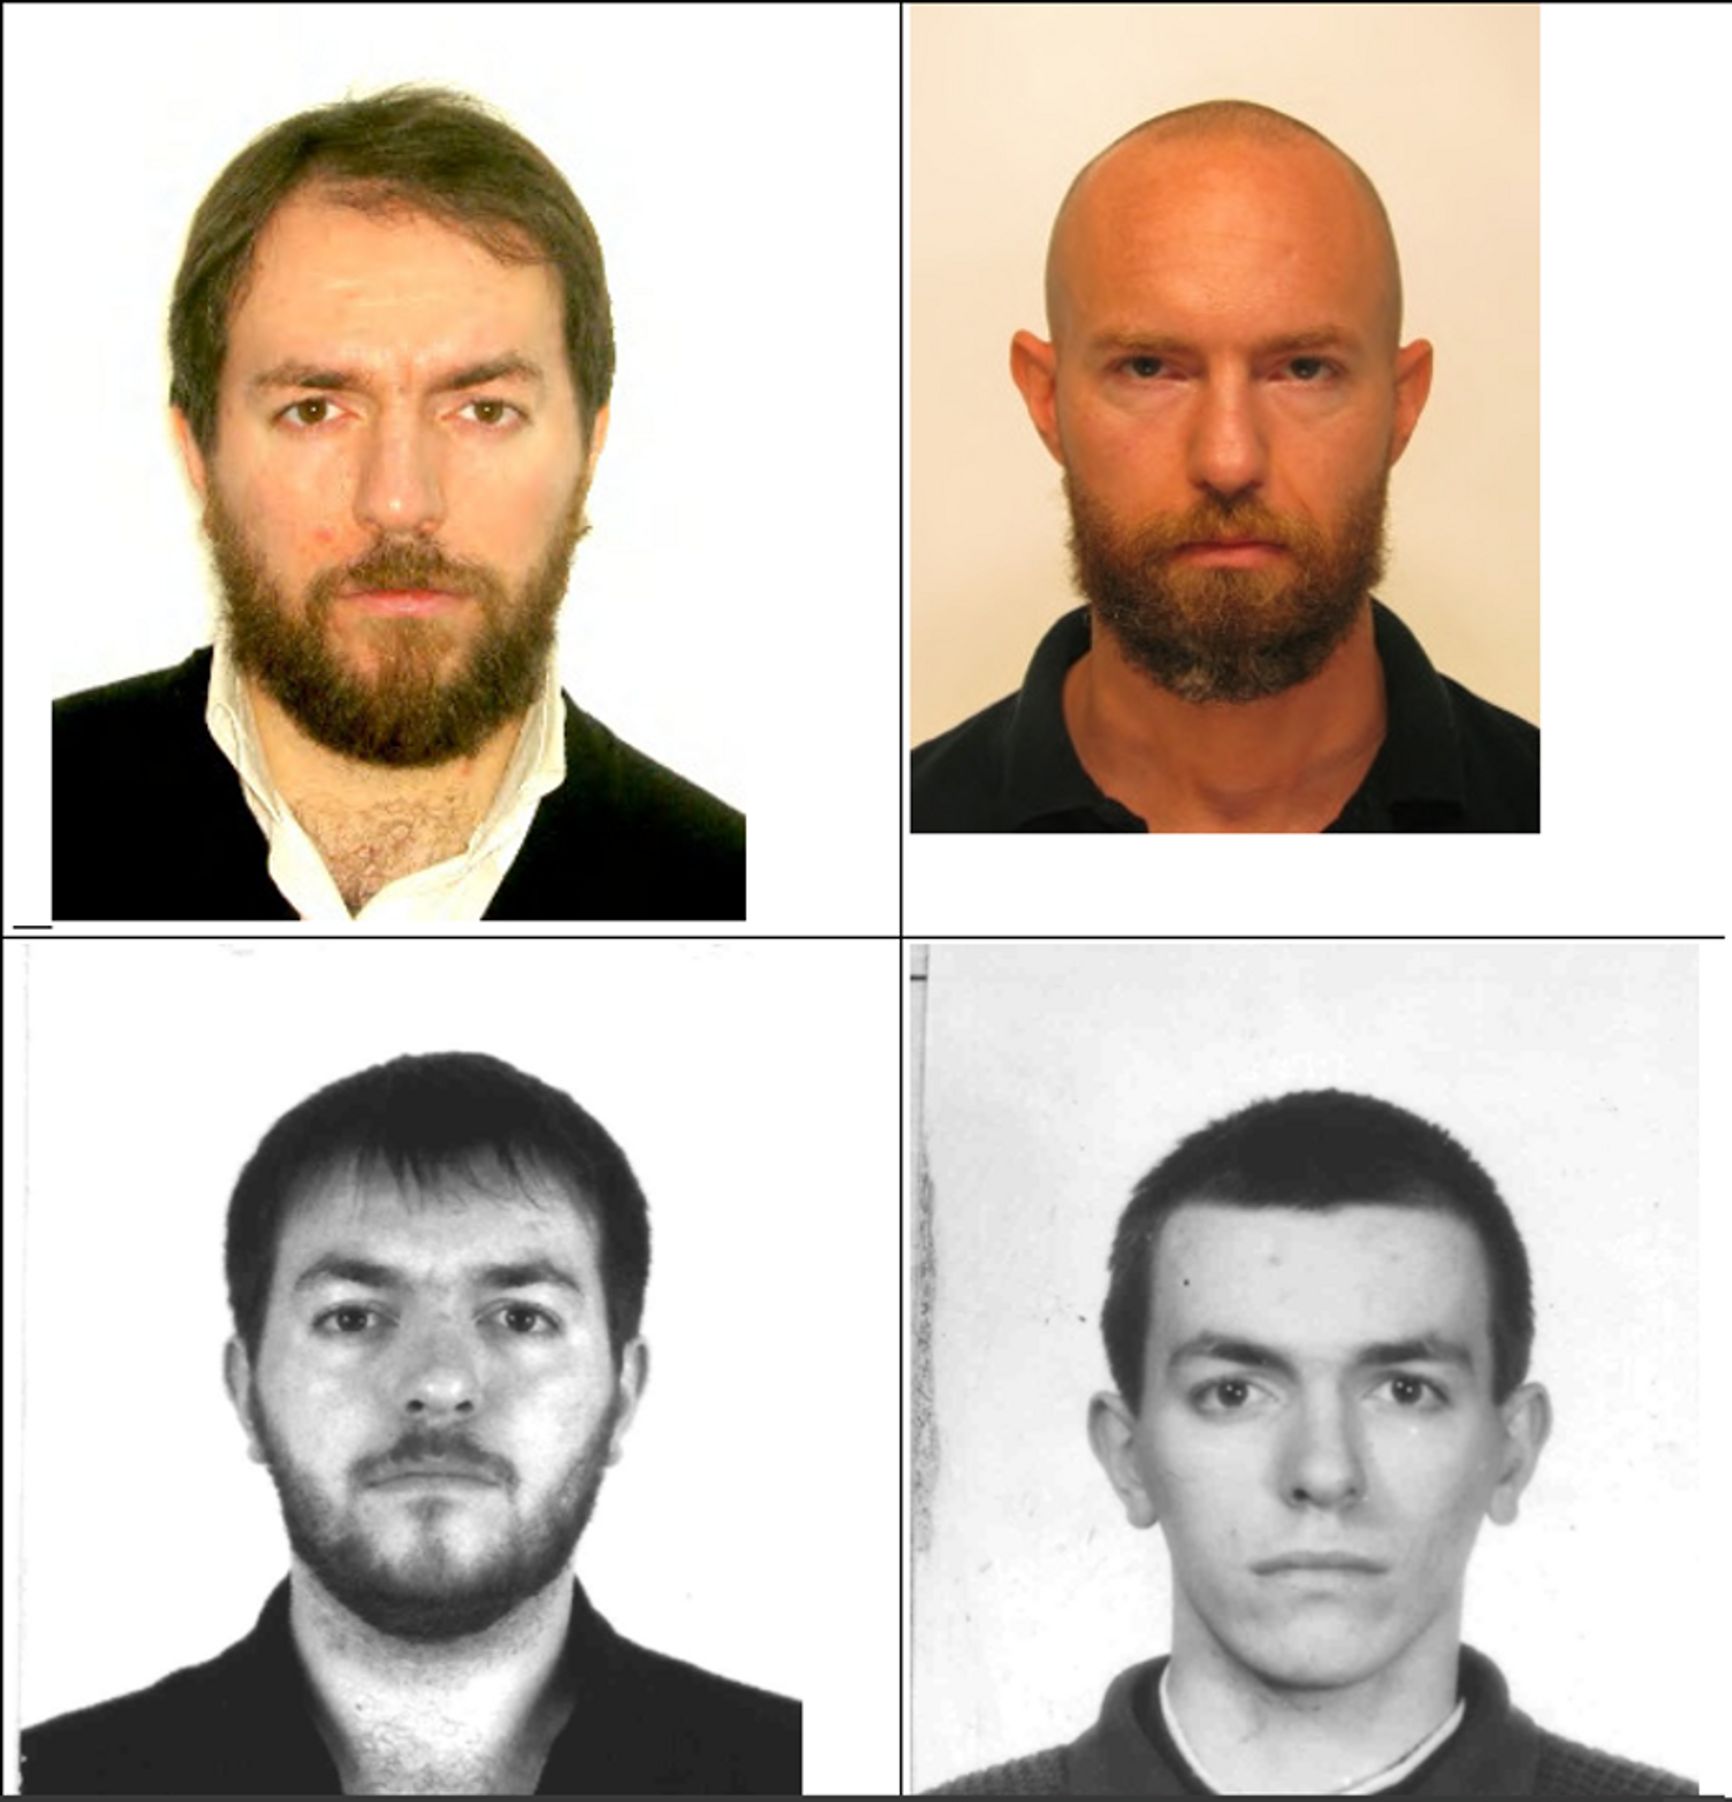 At top, Jan Marsalek. At bottom, the man whose identity he has assumed in Russia, Orthodox priest Konstanin Baiazov.